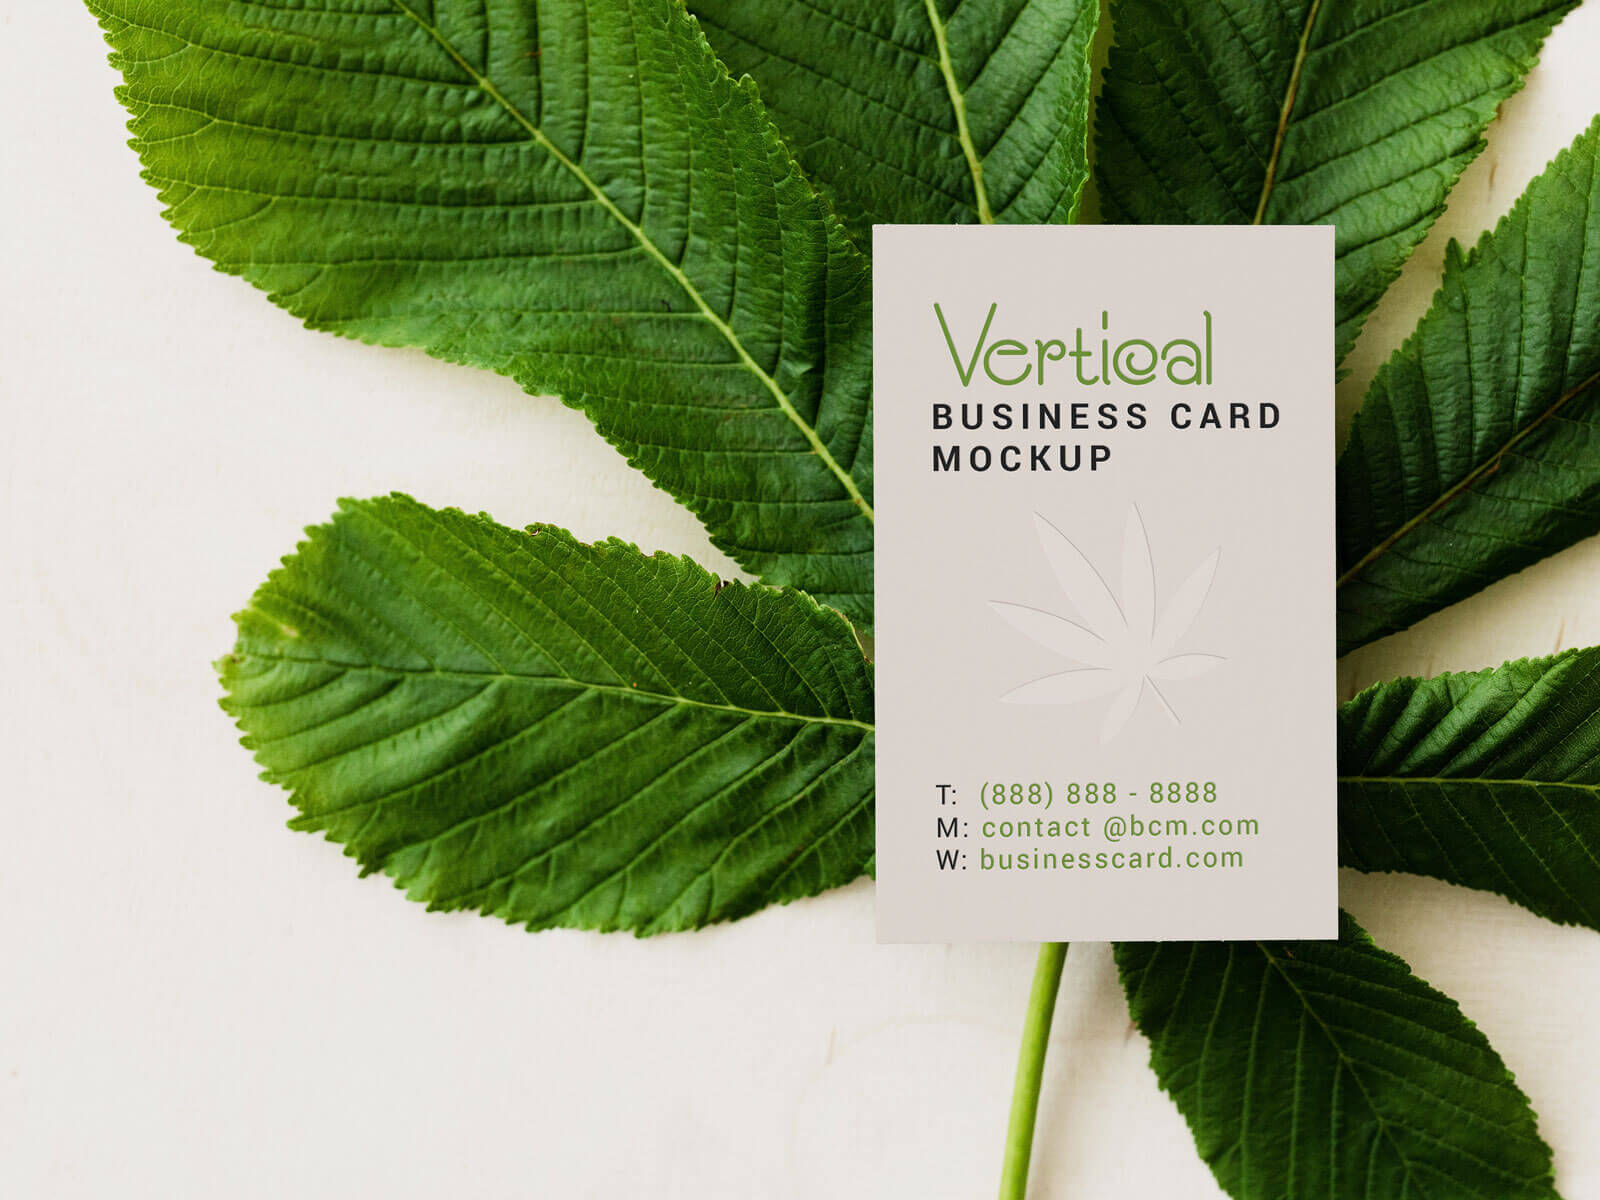 Horizontal and Vertical Business Card Mockup Set FREE PSD